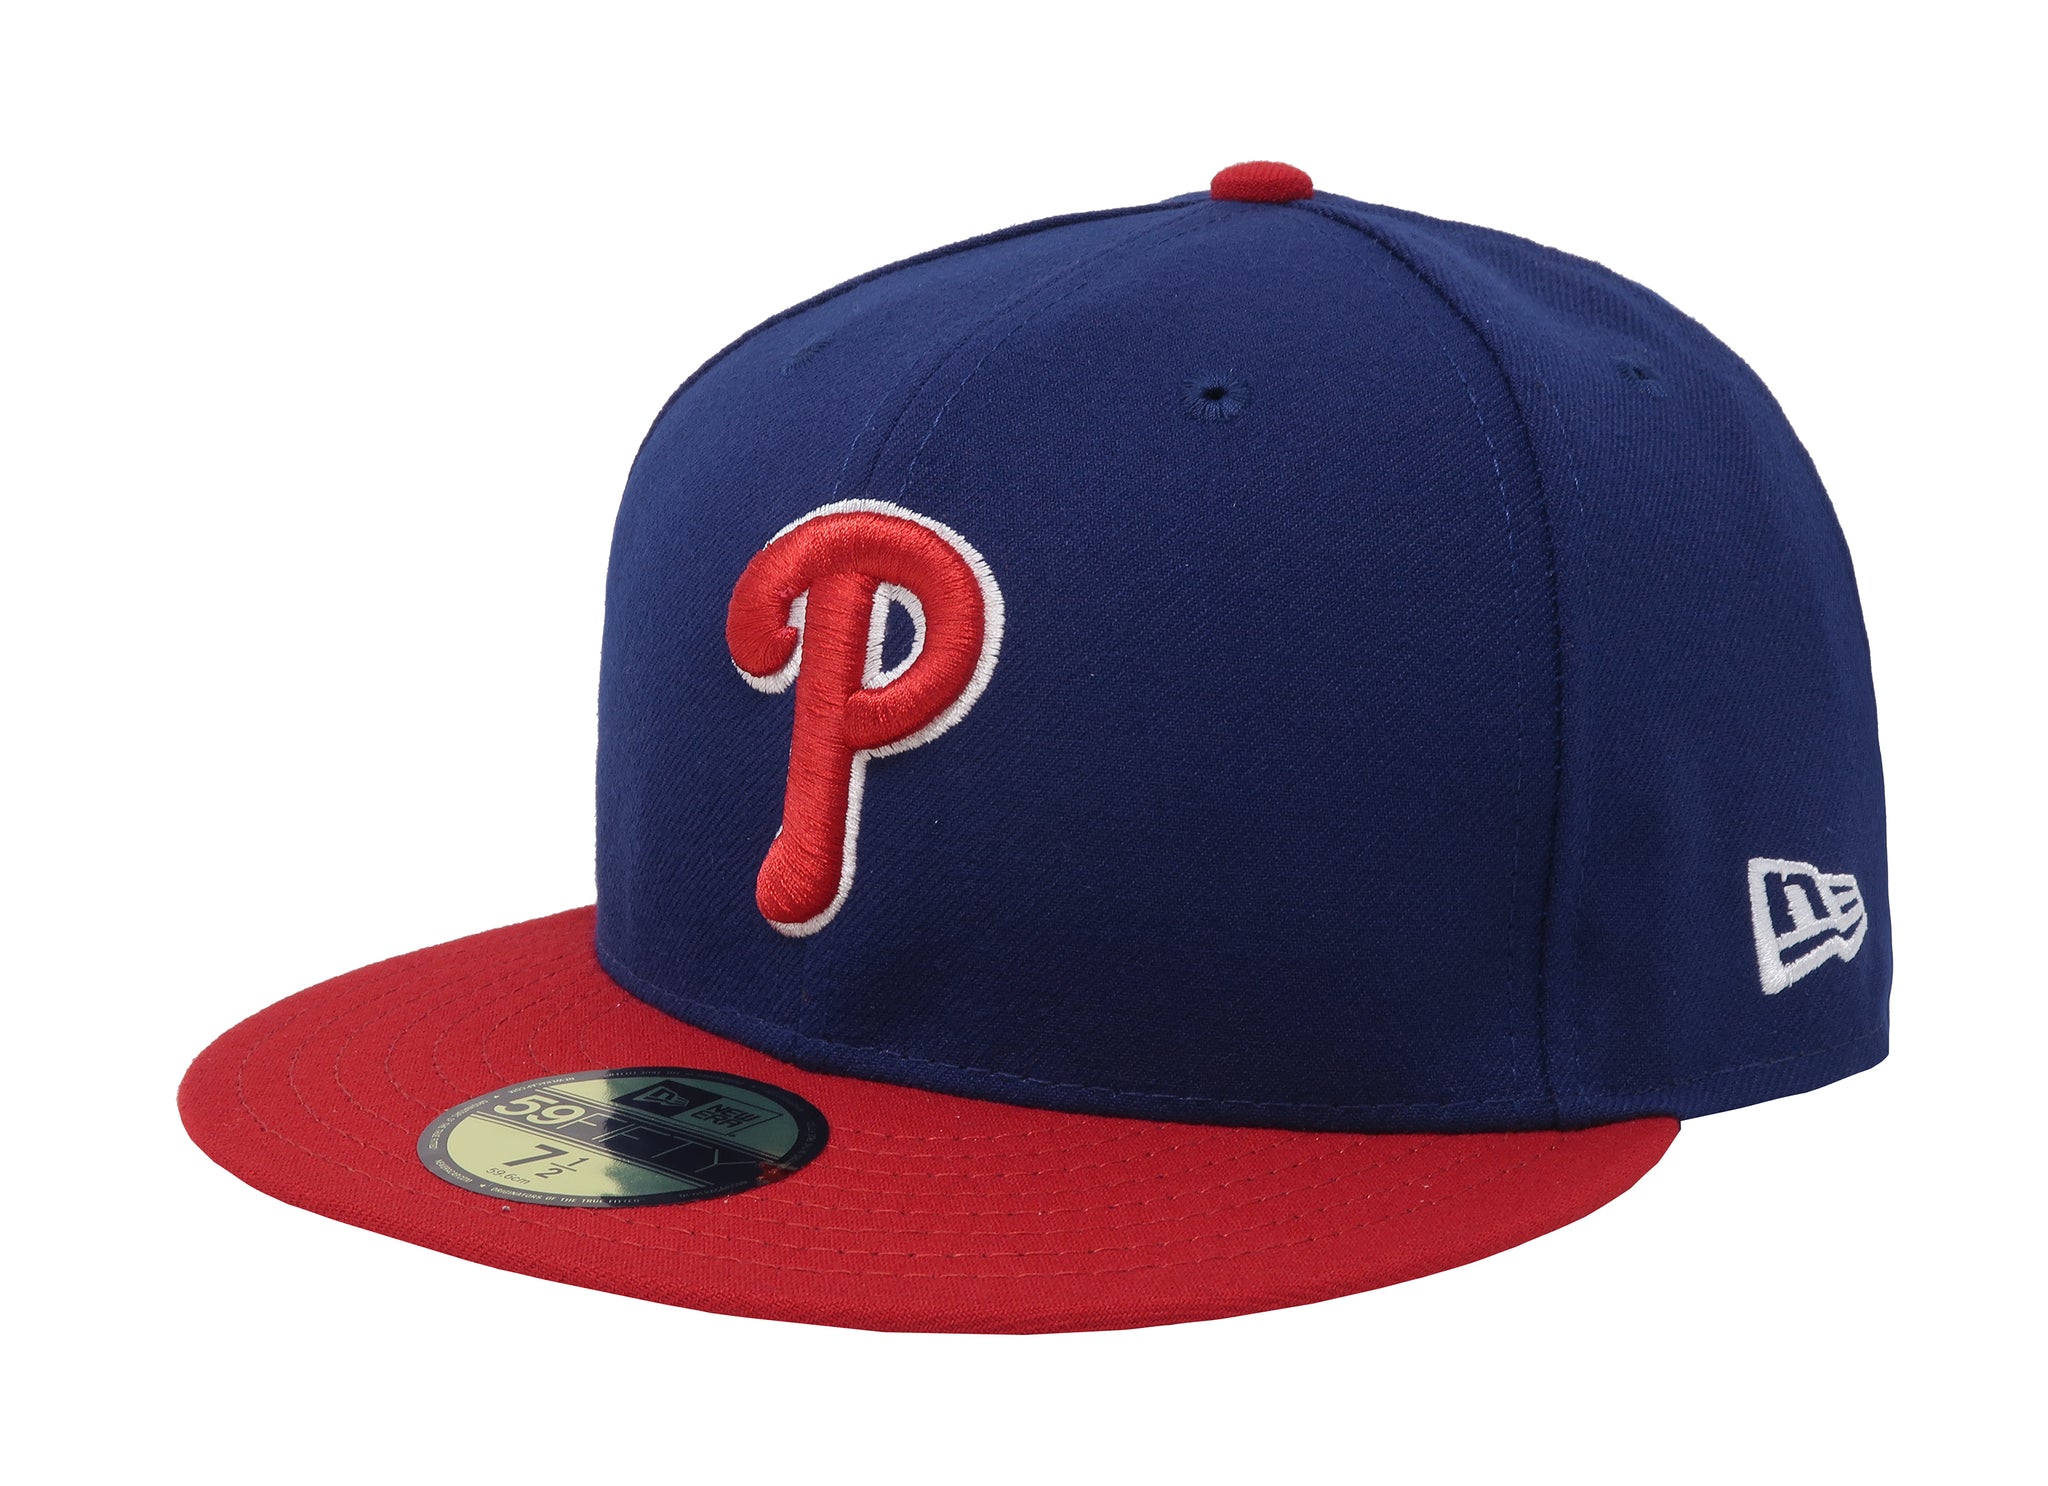 New Era 59Fifty Men's MLB Basic Philadelphia Phillies Royal Blue Fitted Cap